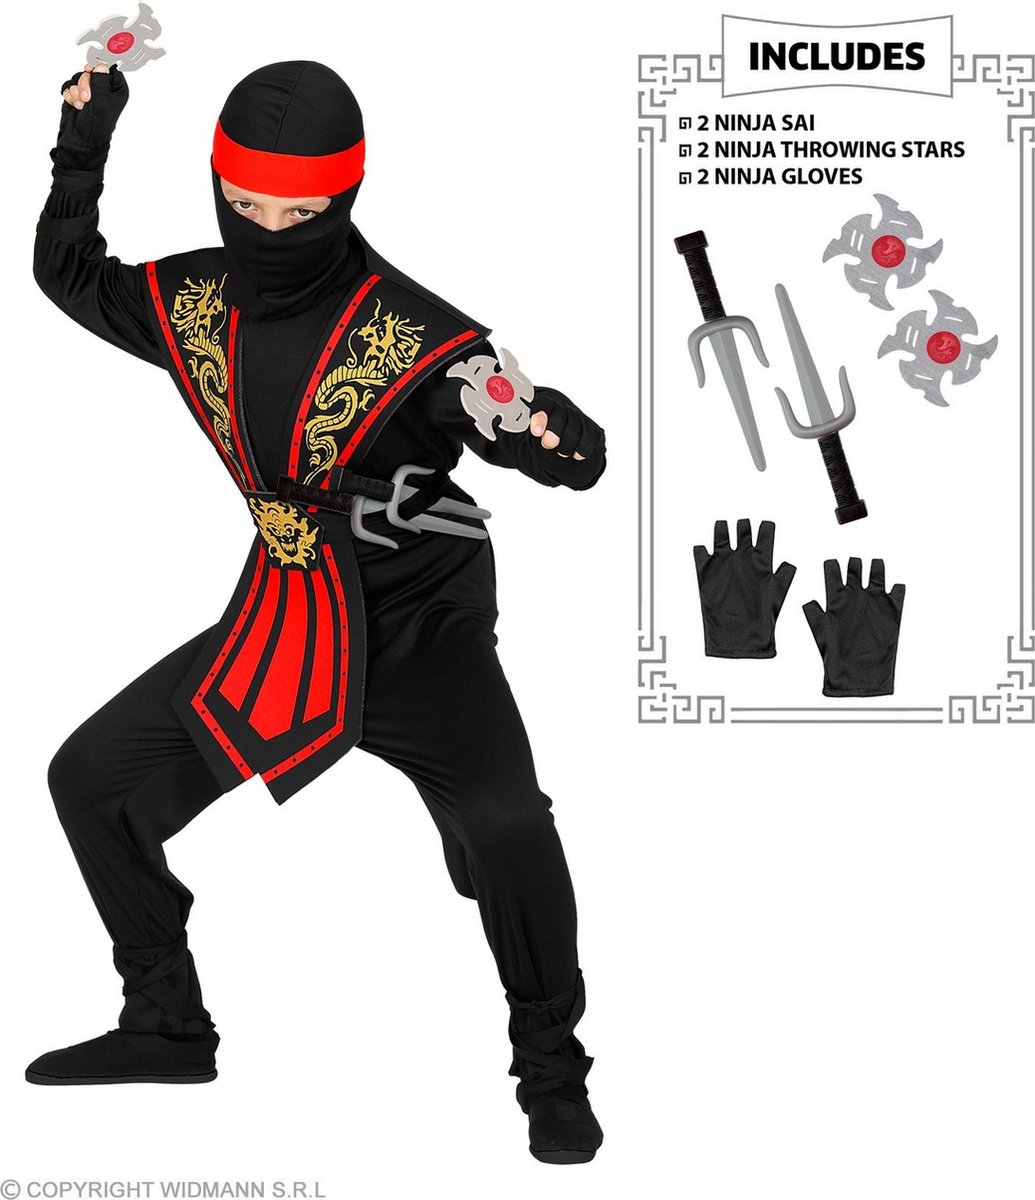 Widmann - Ninja & Samurai Kostuum - Vurige Draken Ninja Met Wapens Kind - Jongen - Rood, Zwart - Maat 116 - Carnavalskleding - Verkleedkleding